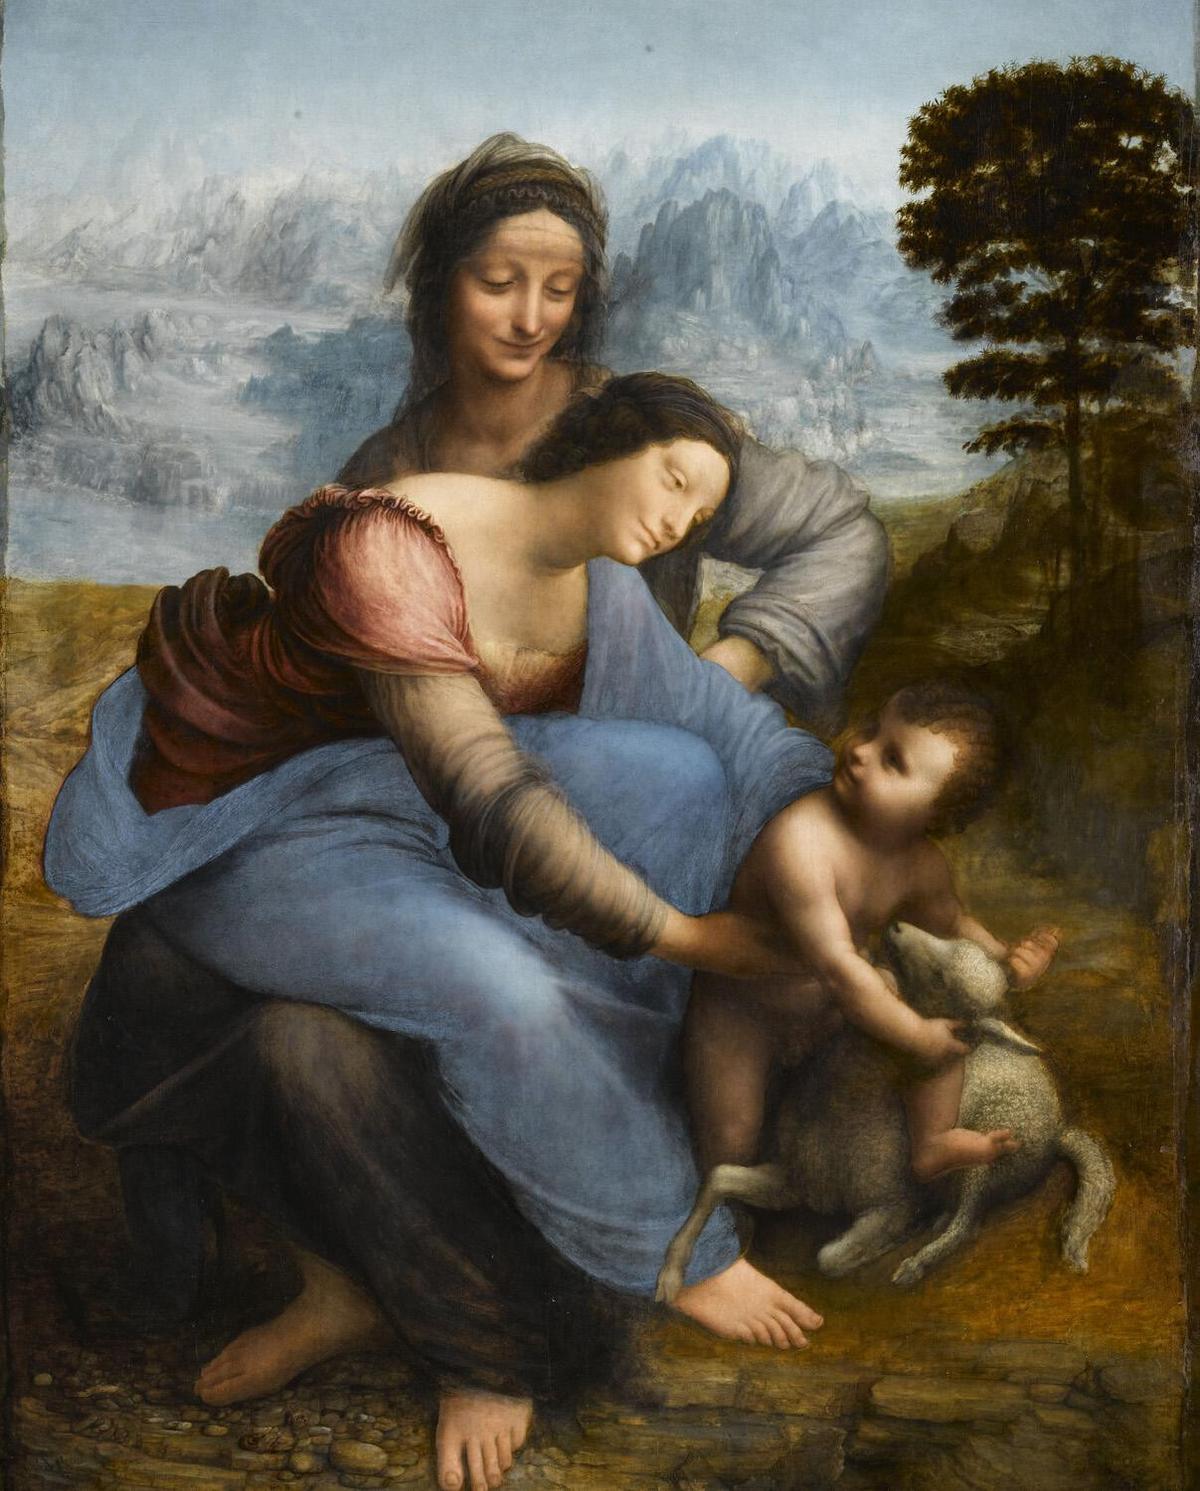 "The Virgin and Child with Saint Anne" by Leonardo da Vinci.